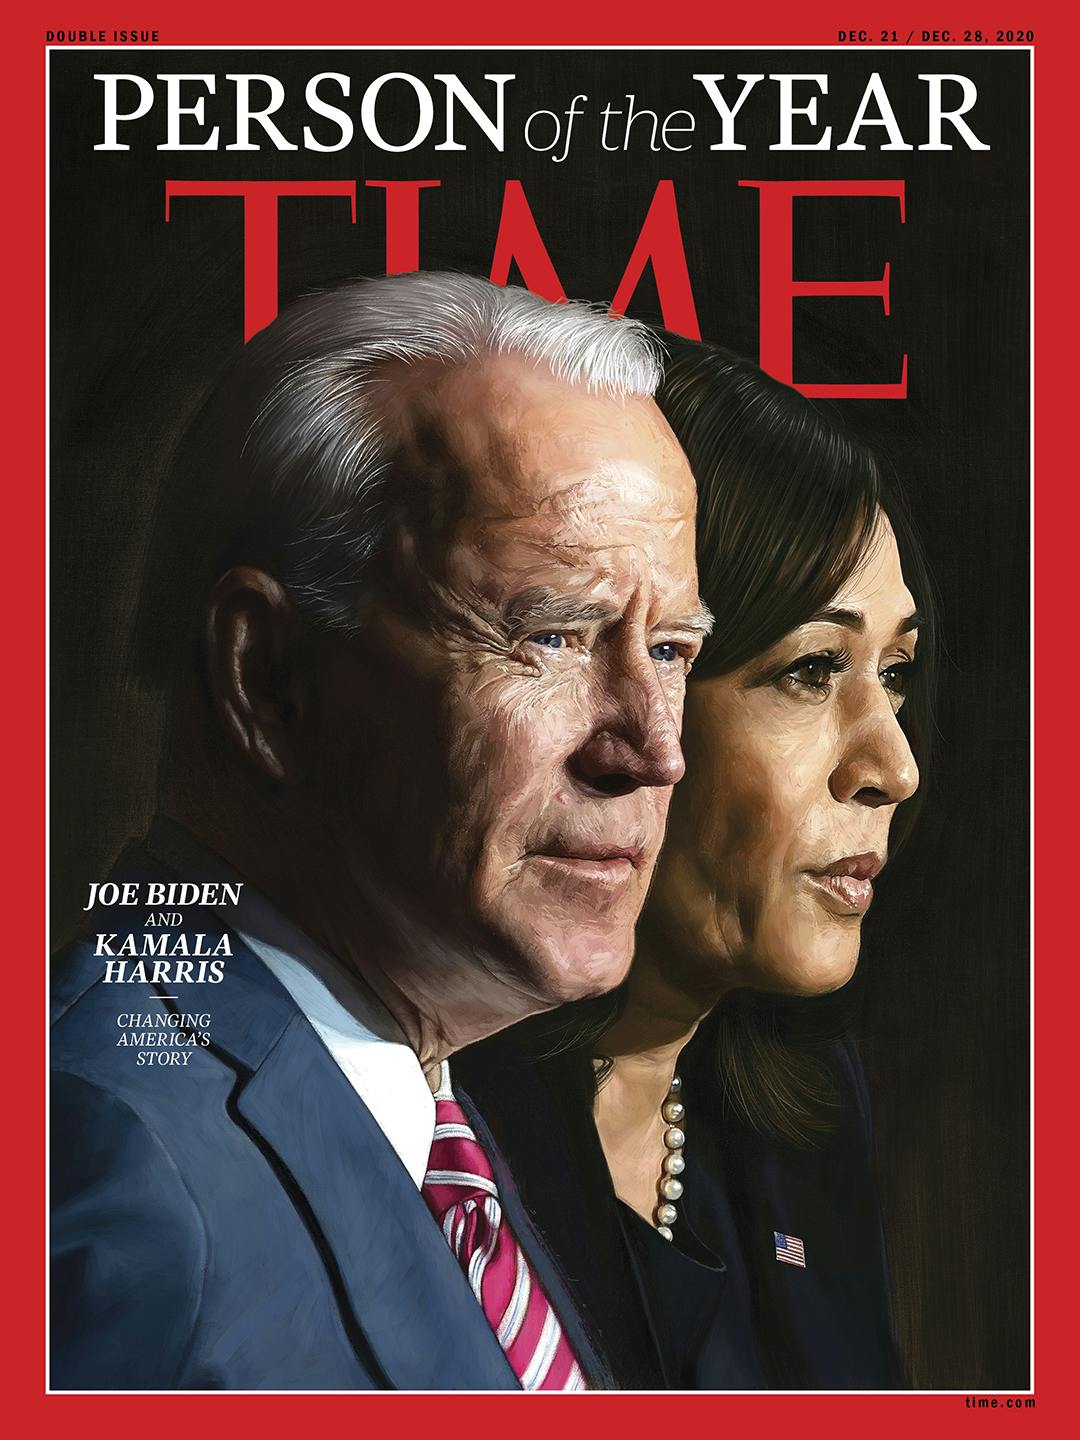 A portrait of Joe Biden and Kamala Harris